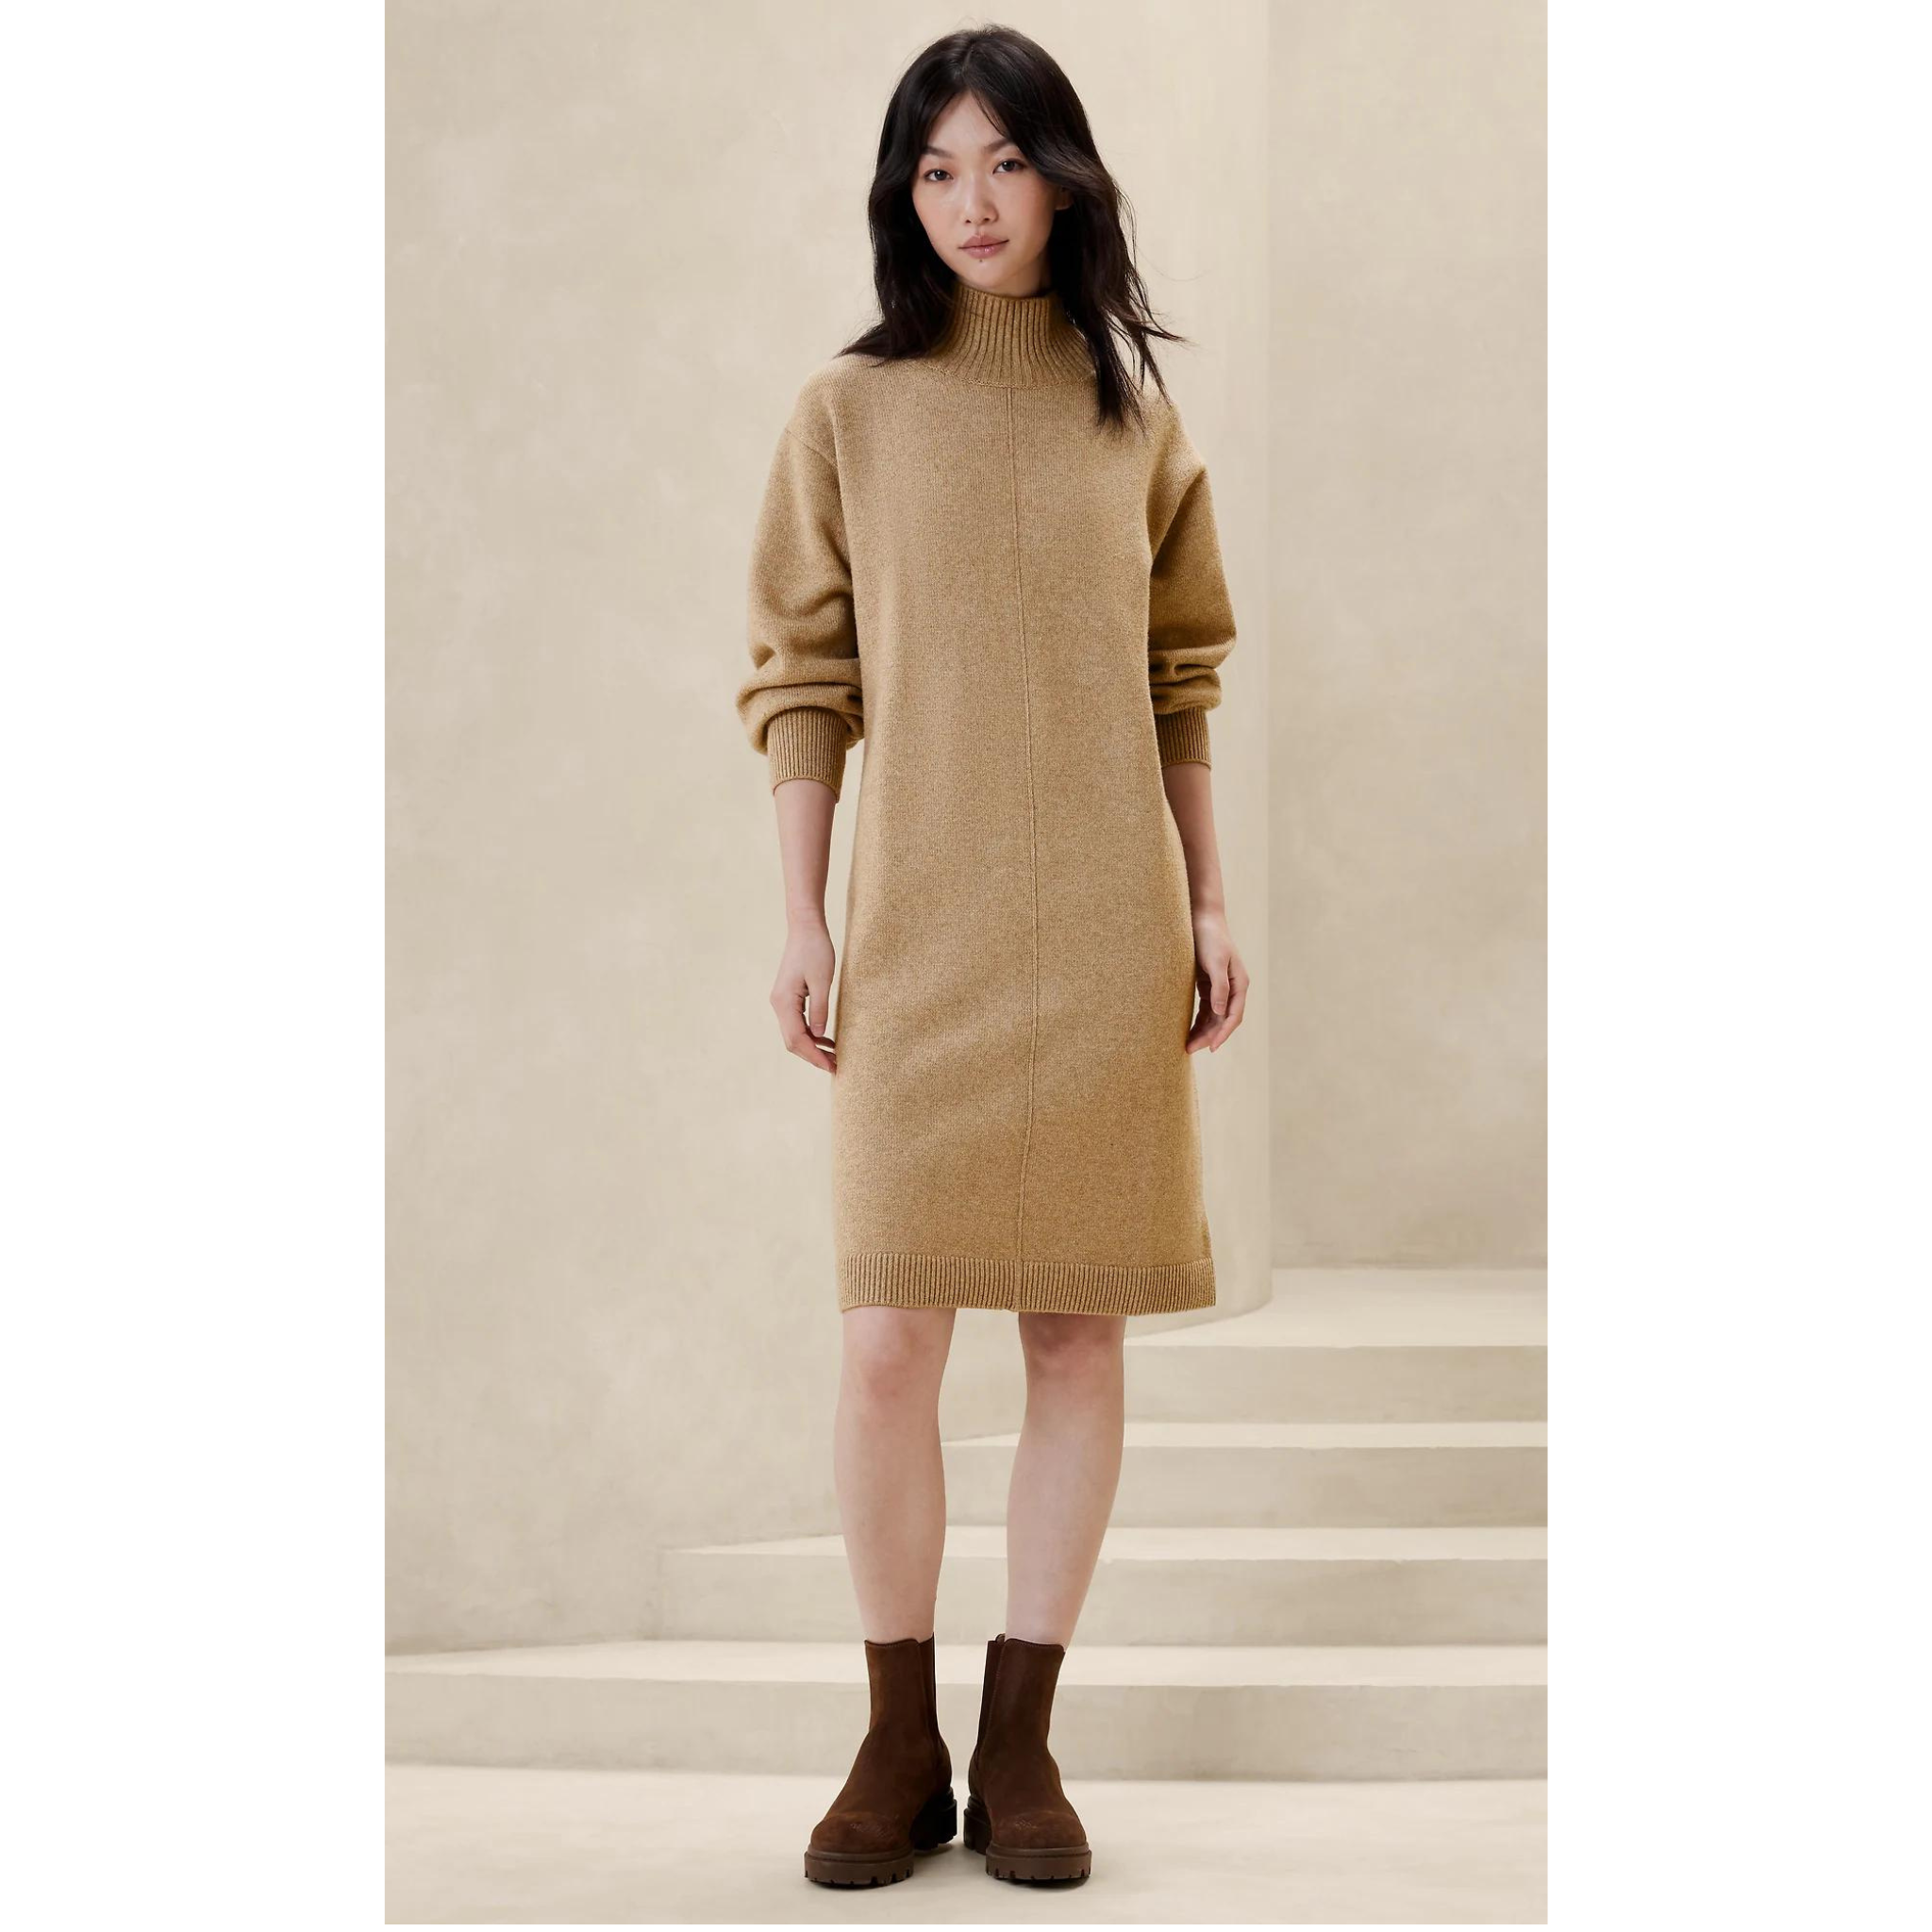 Banana Republic Factory Factory Knee Length Sweater Dress (3 COLORS)